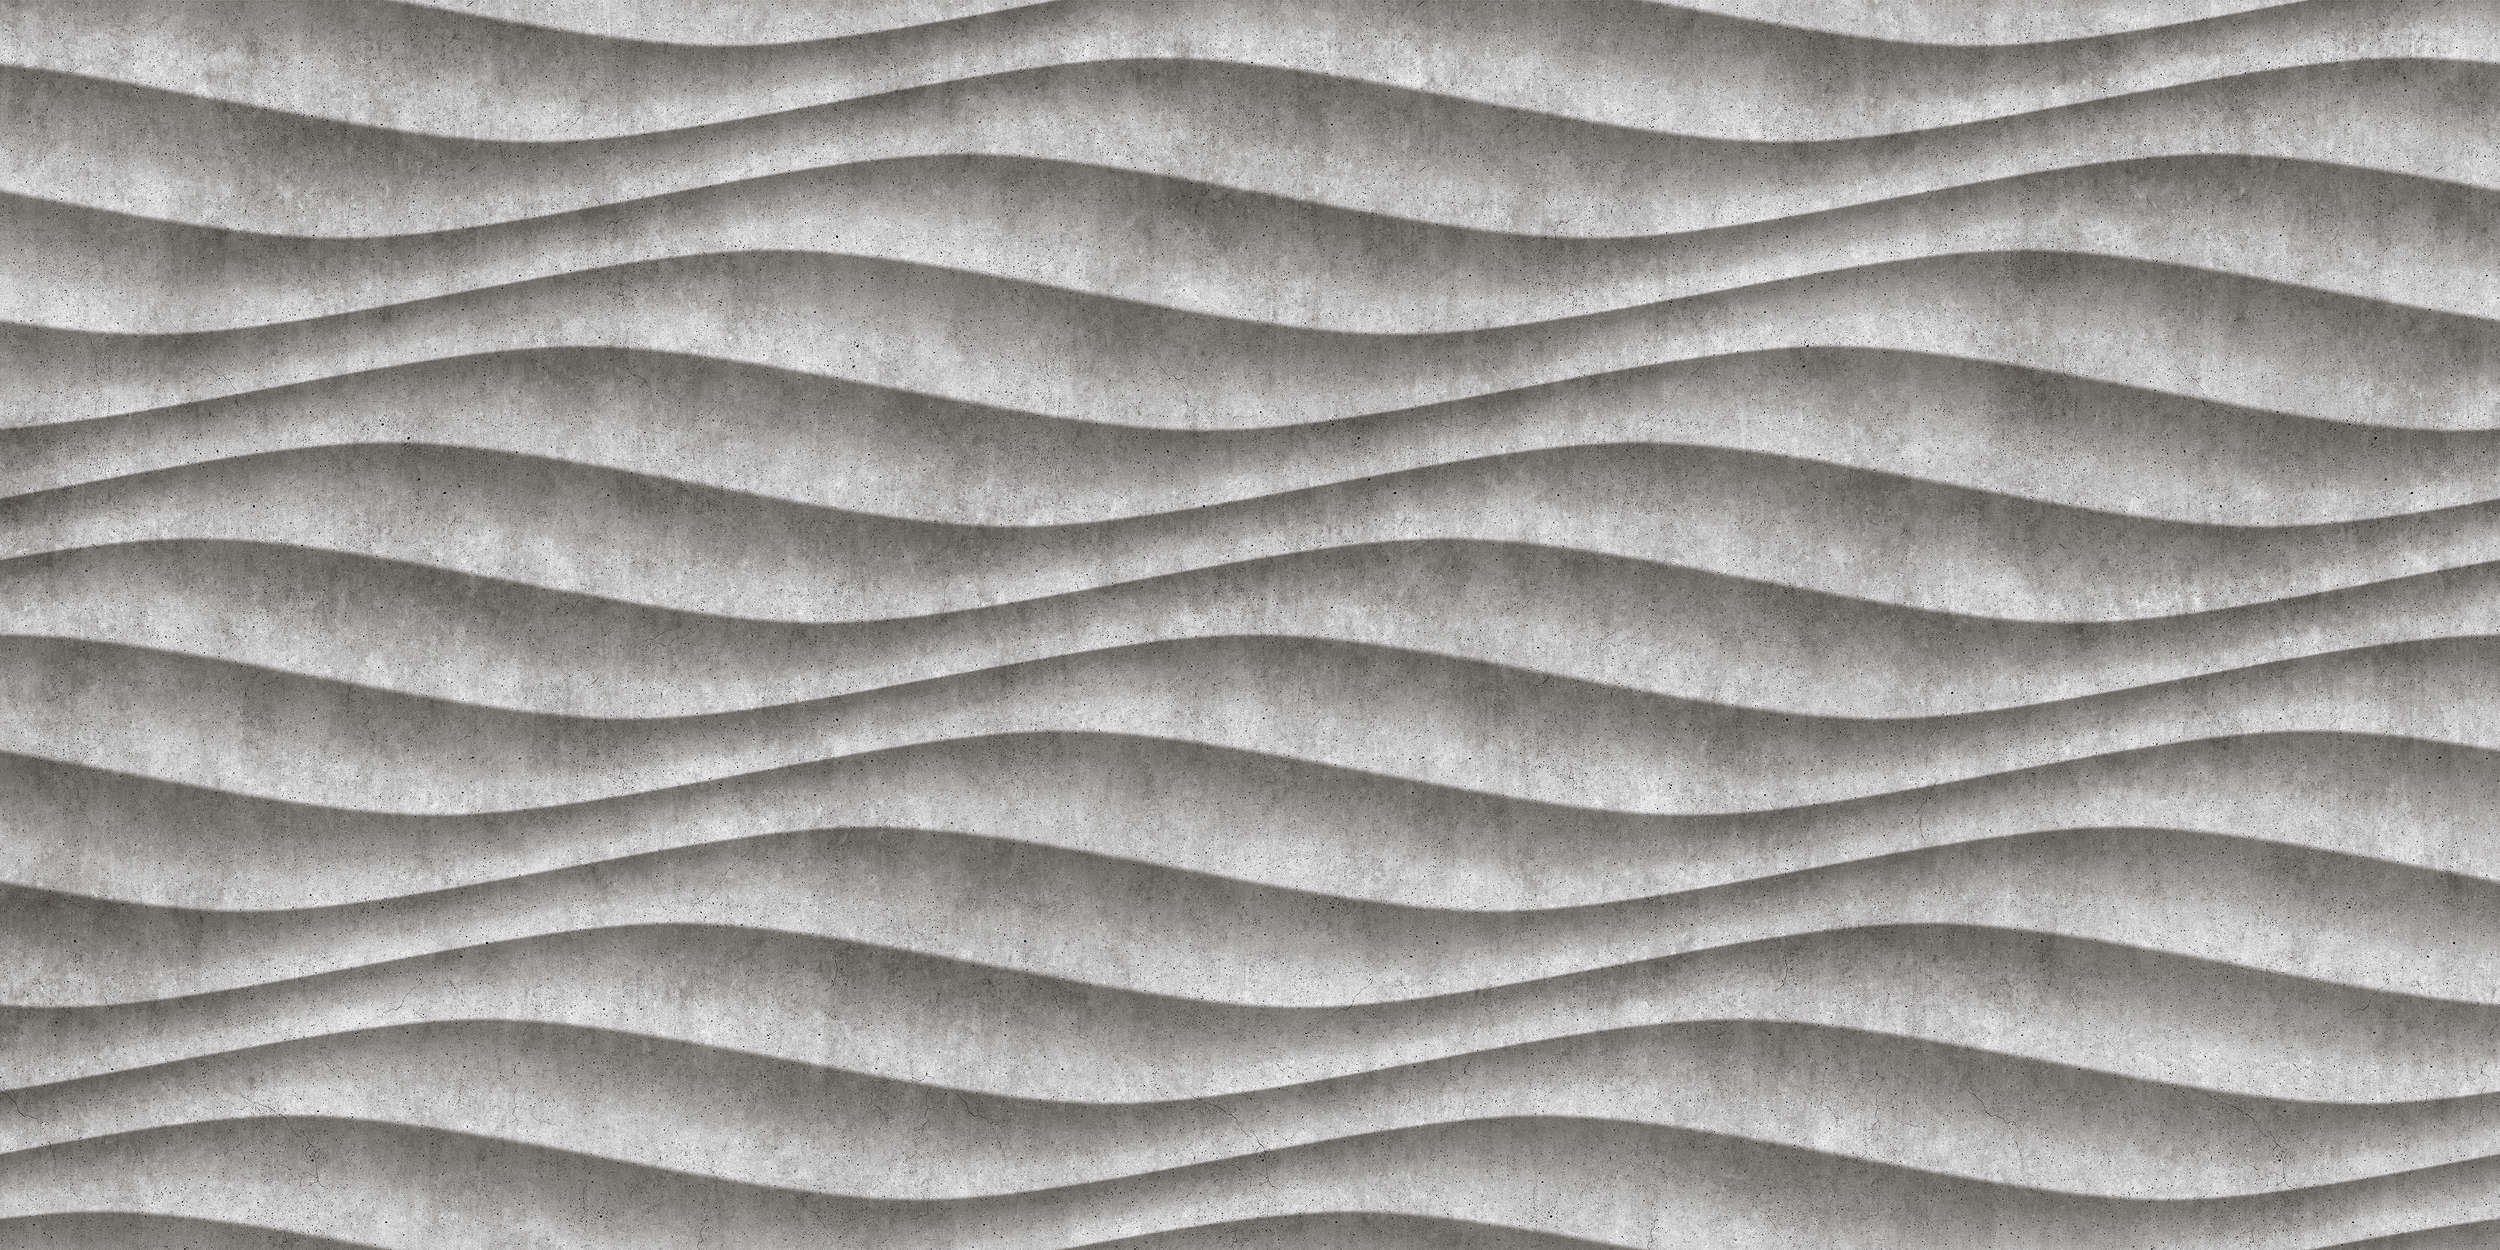             Canyon 2 - Cool 3D Concrete Waves Onderlaag behang - Grijs, Zwart | Pearl Smooth Vliesbehang
        